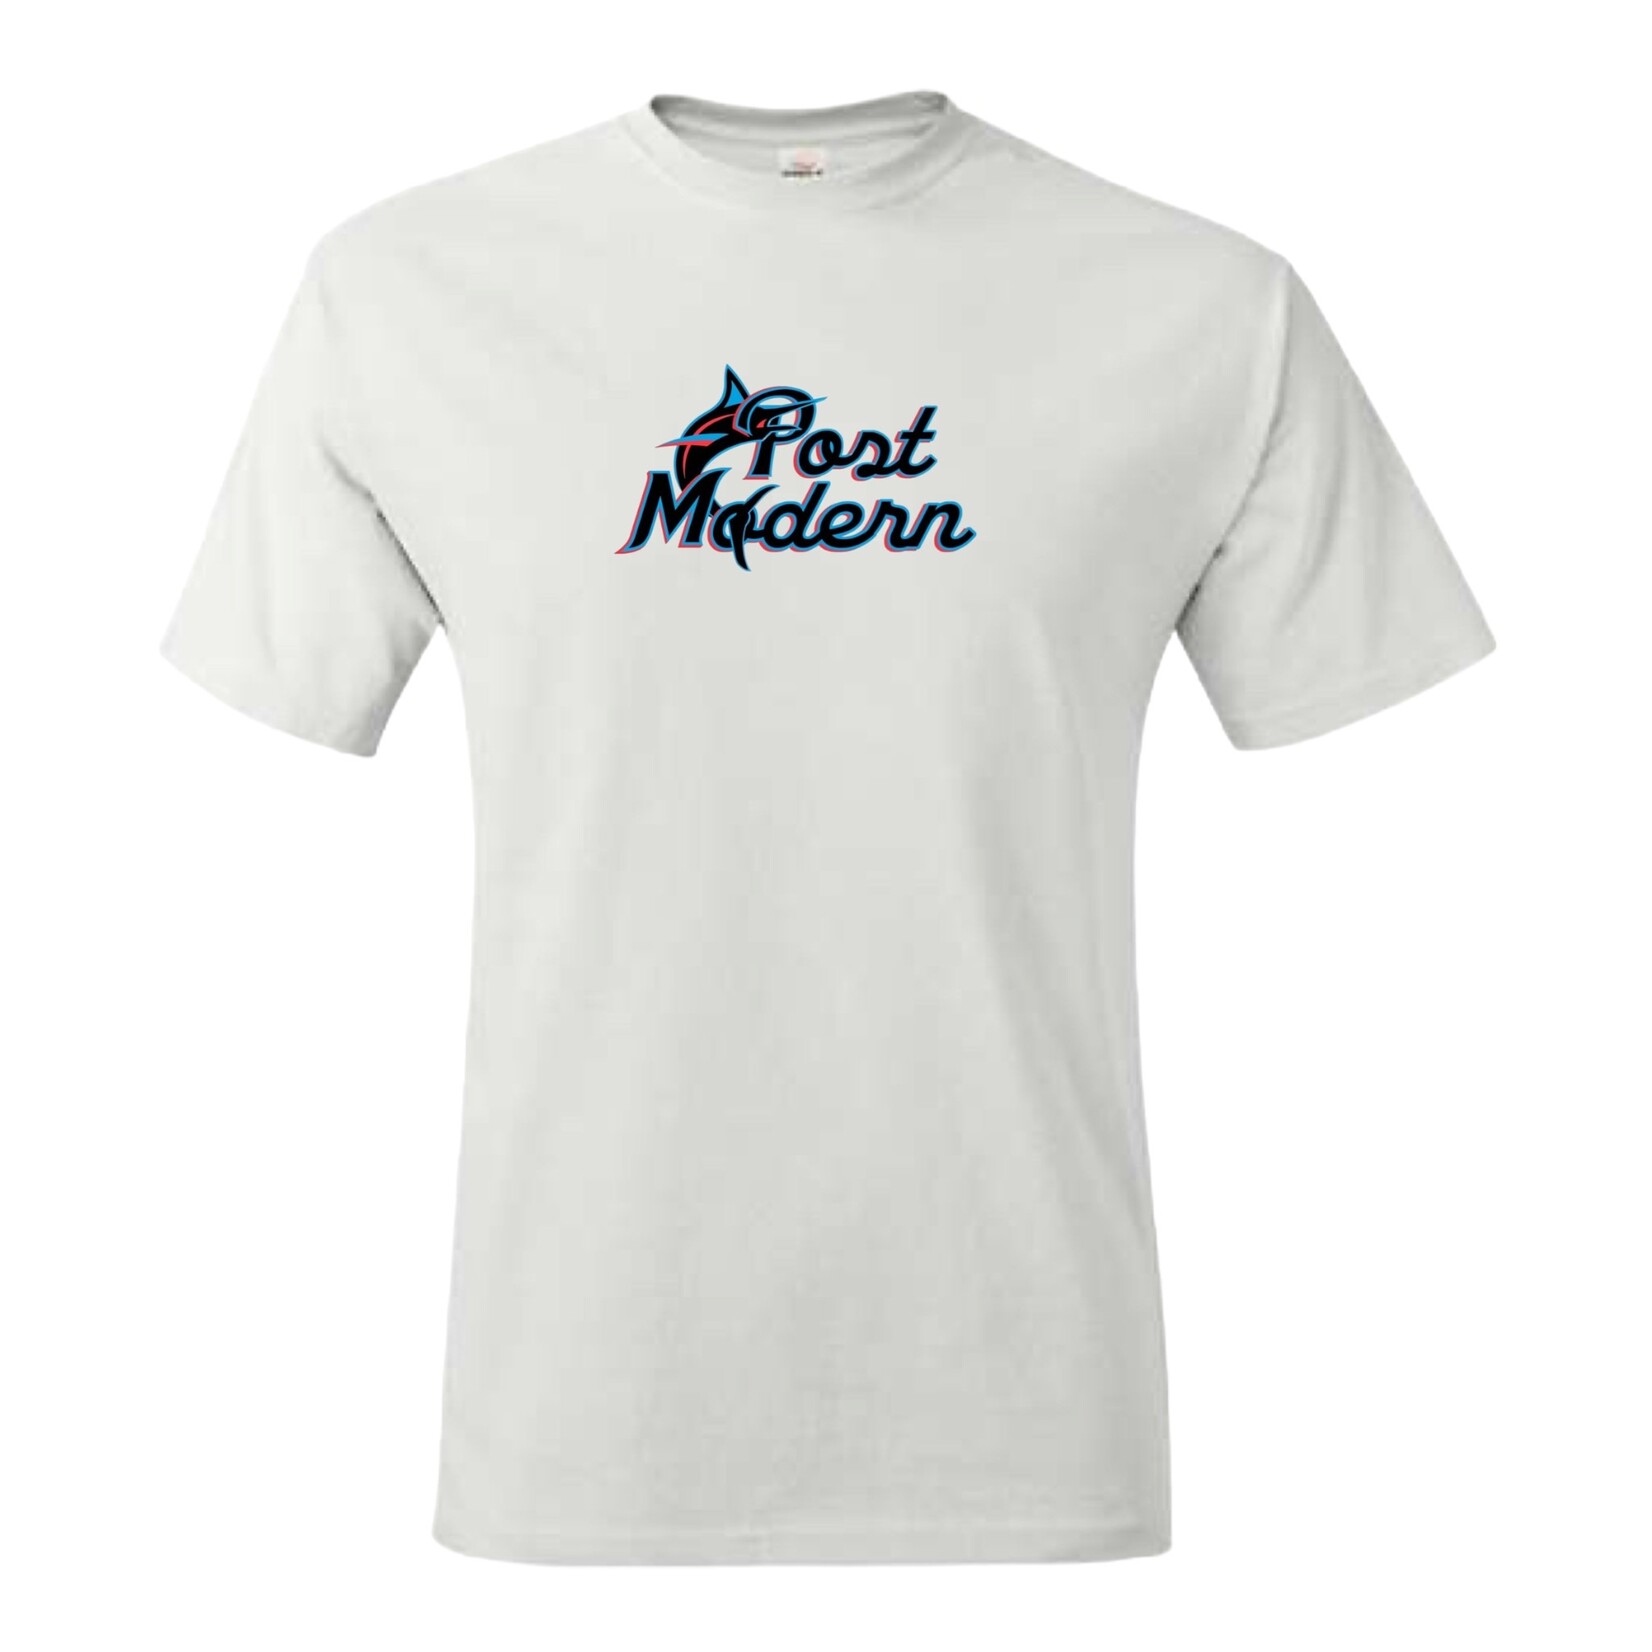 Post Modern Post Modern “Rather Be Fishing” T-Shirt White